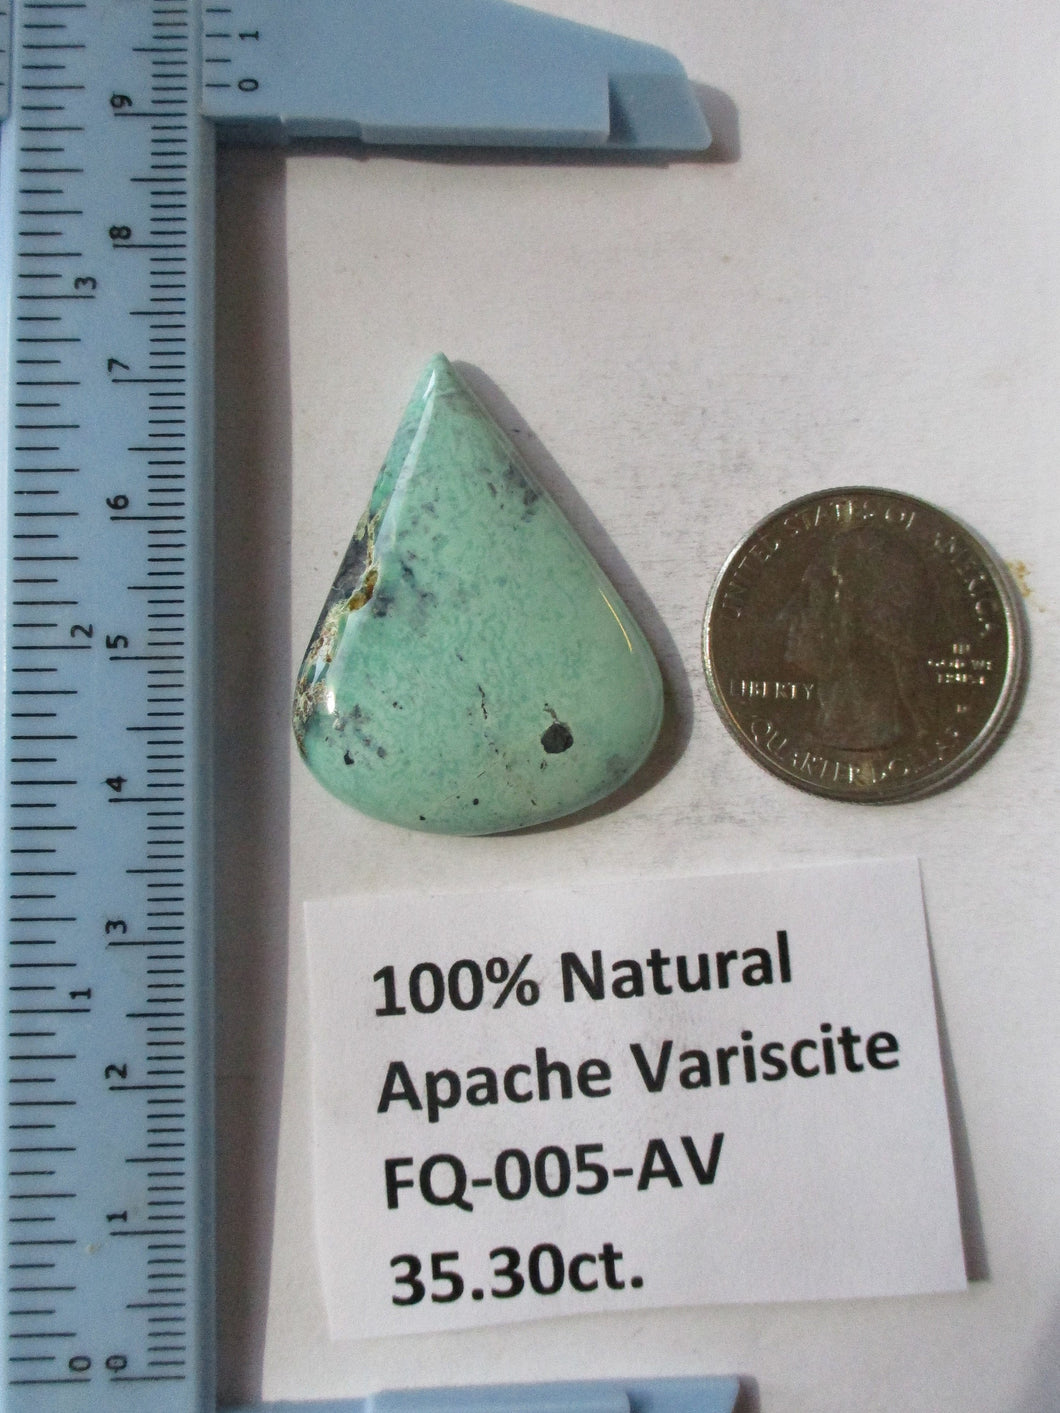 35.3 ct. (36.5x28x6 mm) 100% Natural Apache Variscite Cabochon, Gemstone, # FQ 005